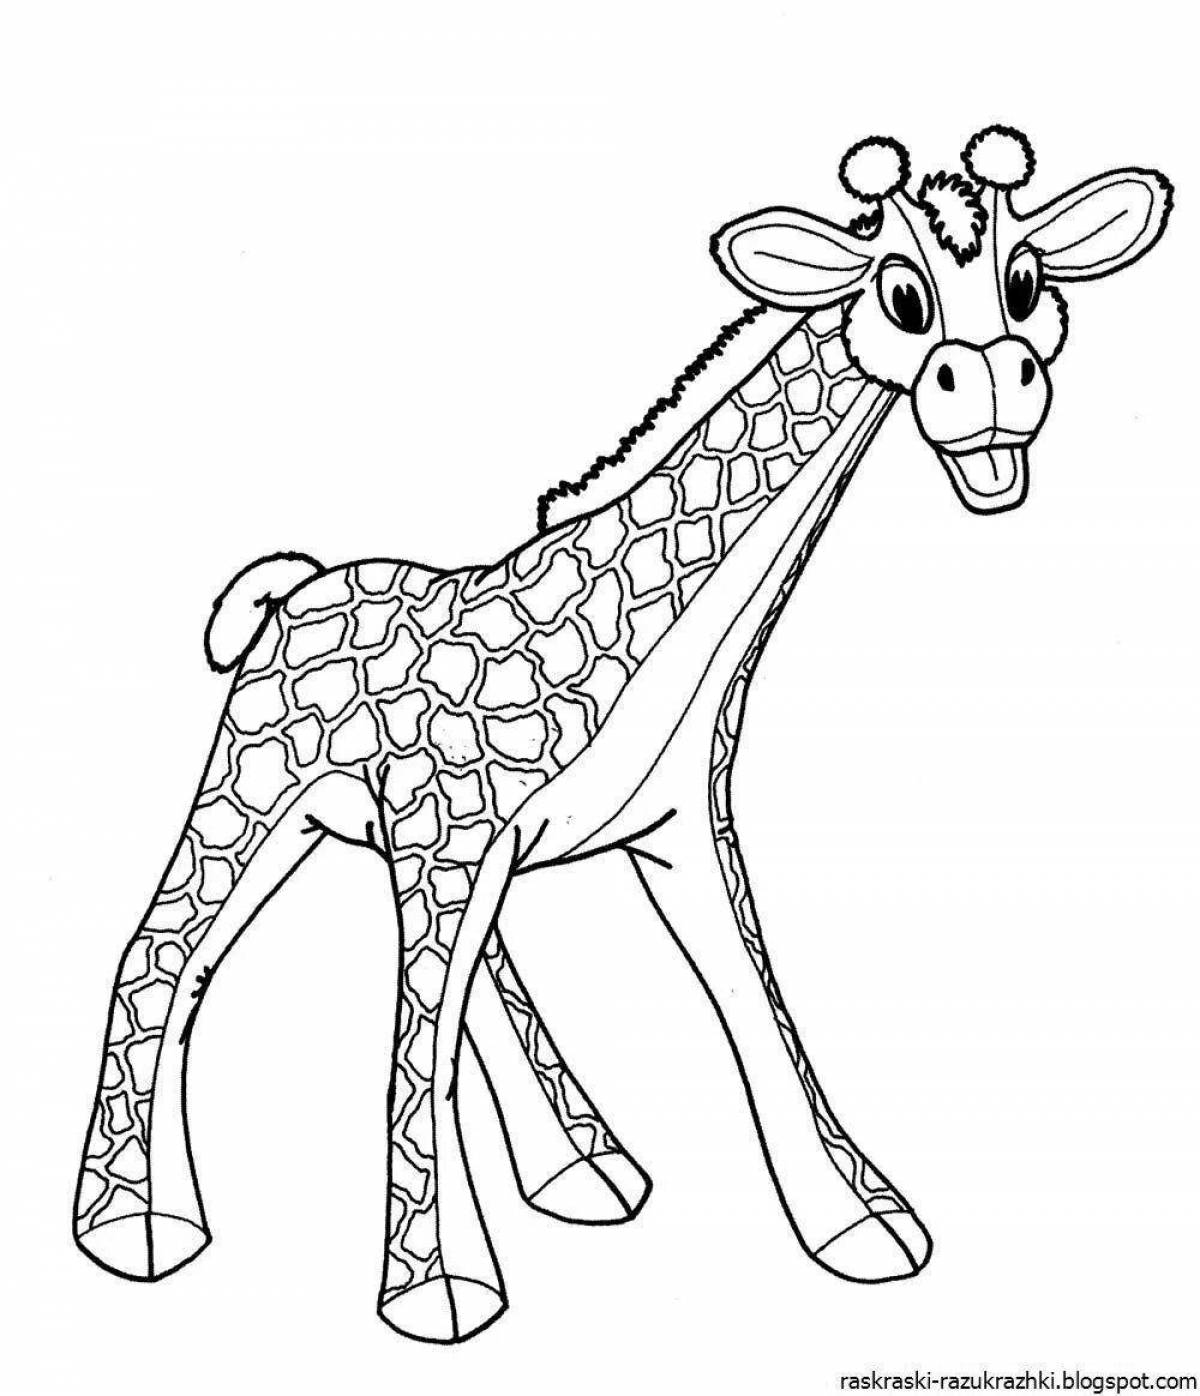 Delightful coloring giraffe